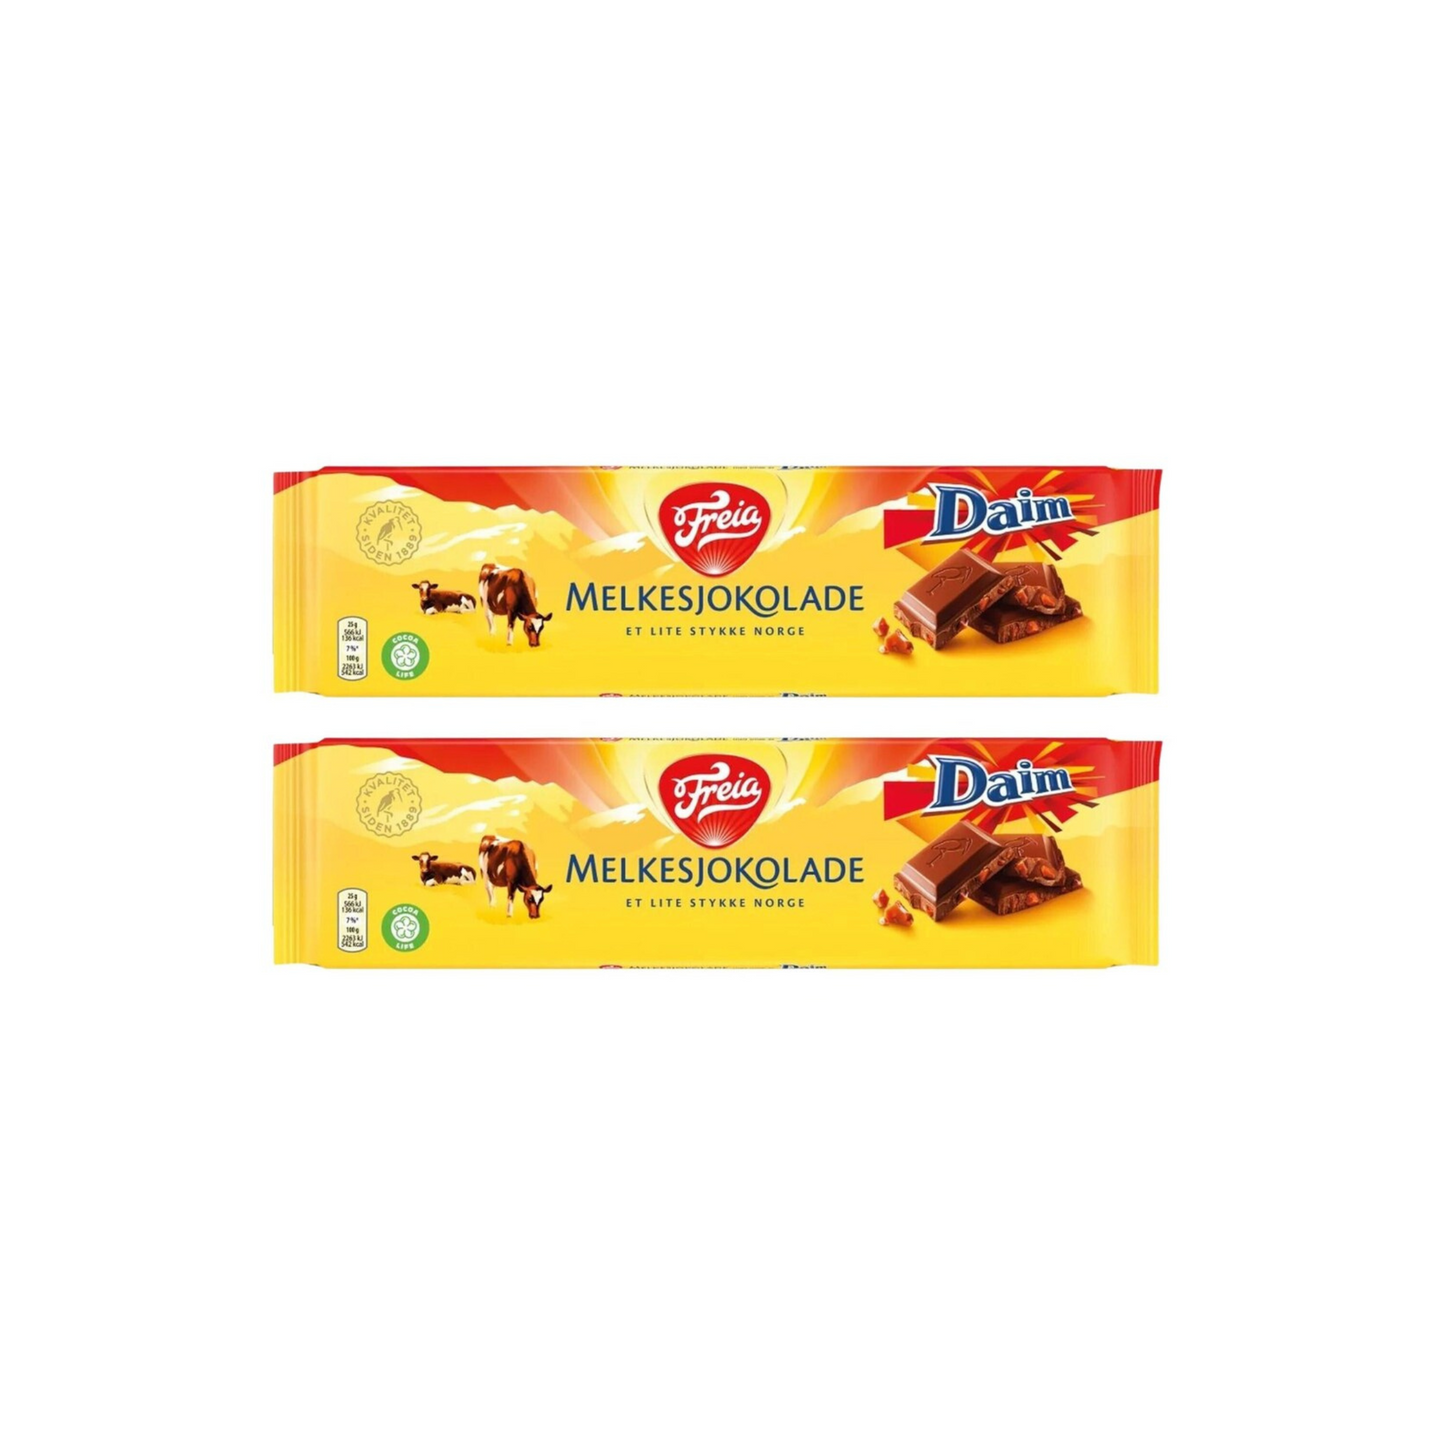 Freia Melksjokolade Daim (2 Pack) - Freia Milk Chocolate with Daim 200 grams (2 Pack)